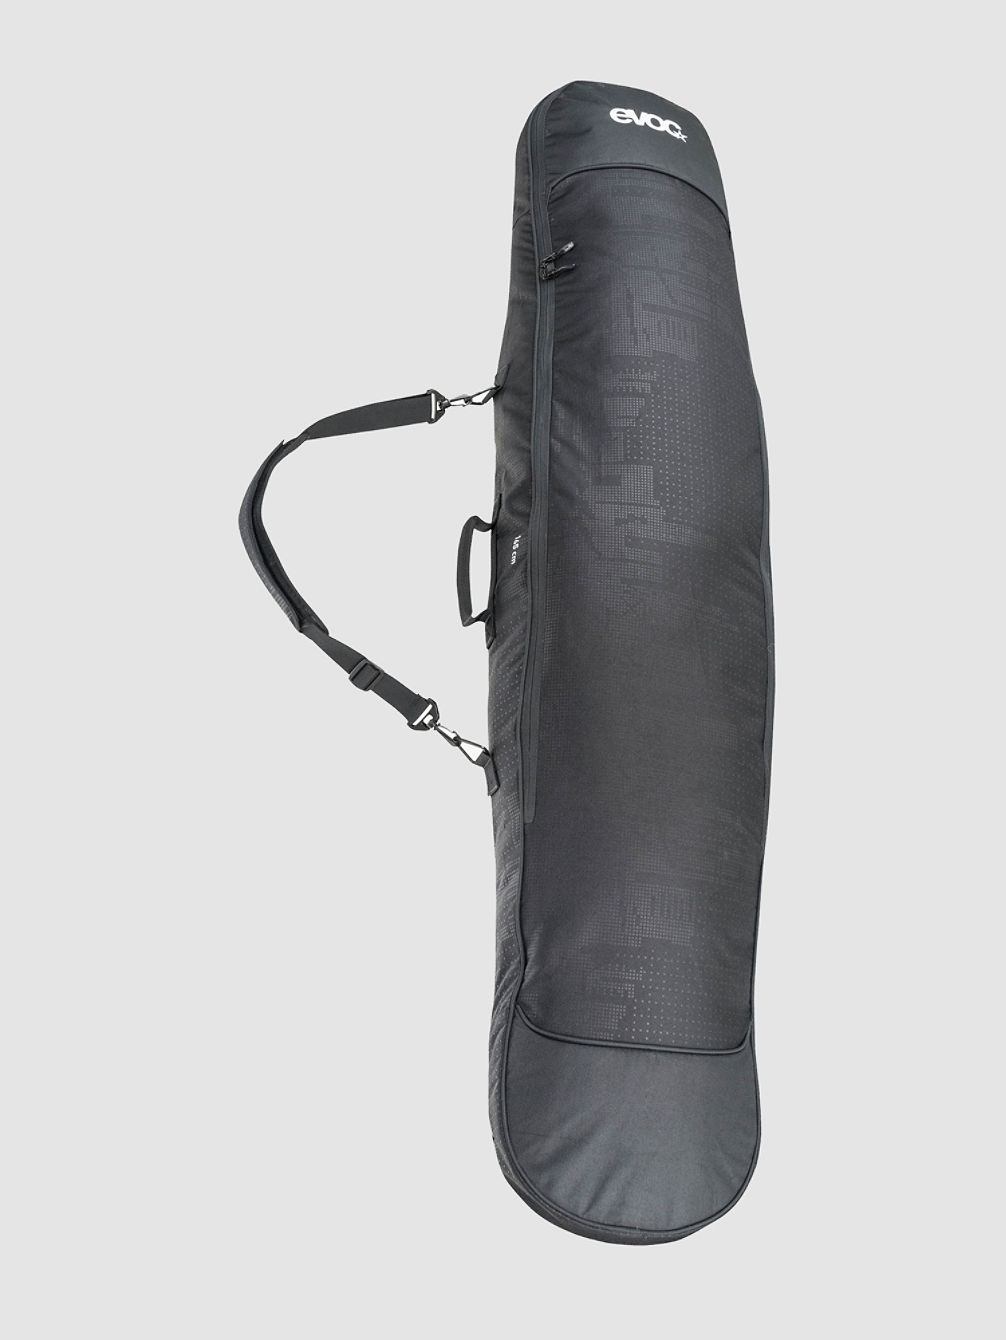 165cm Snowboardbag